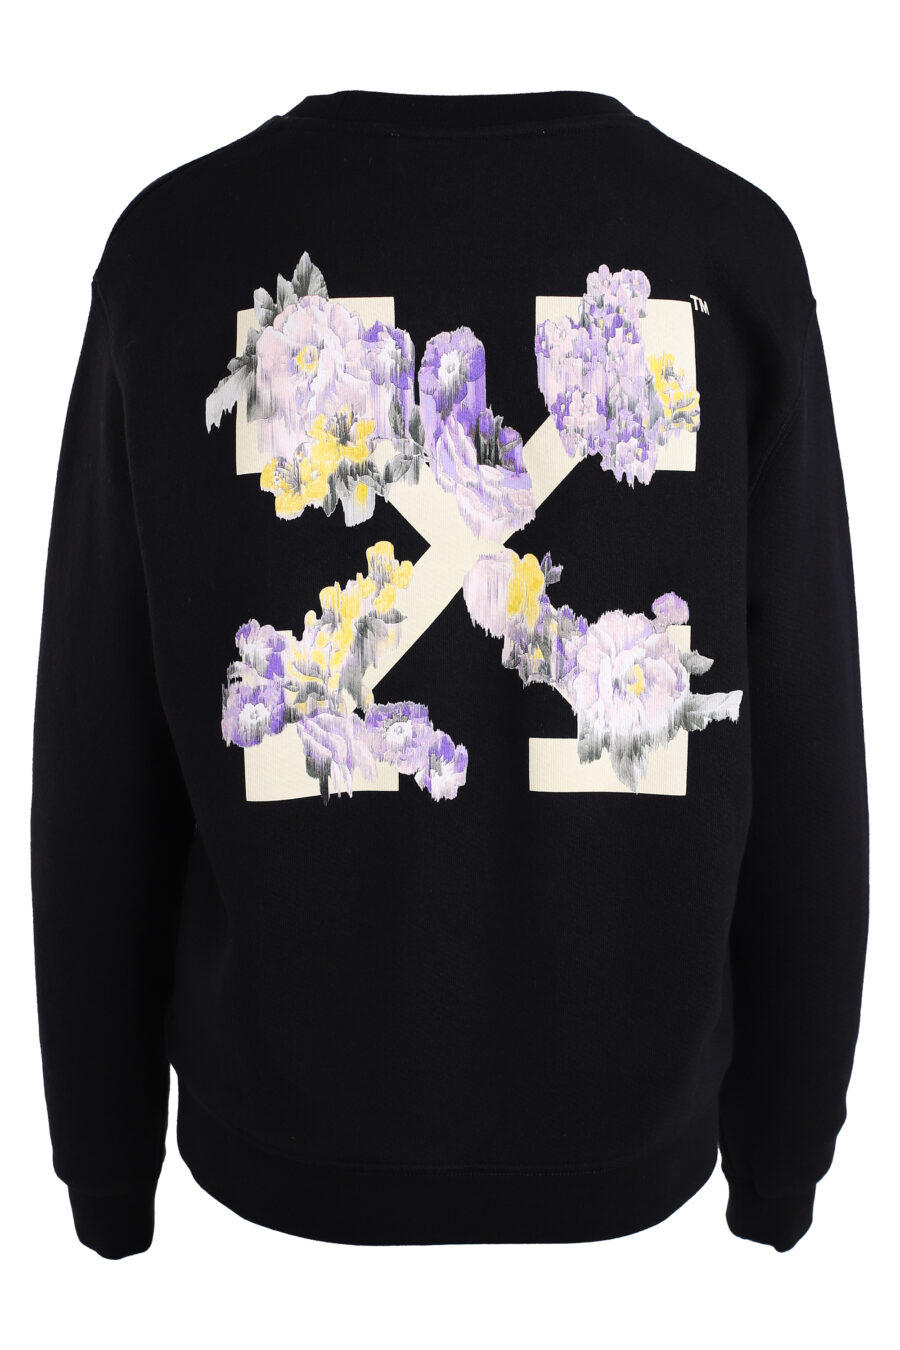 Black sweatshirt with "Flower Arrow" logo - IMG 3396